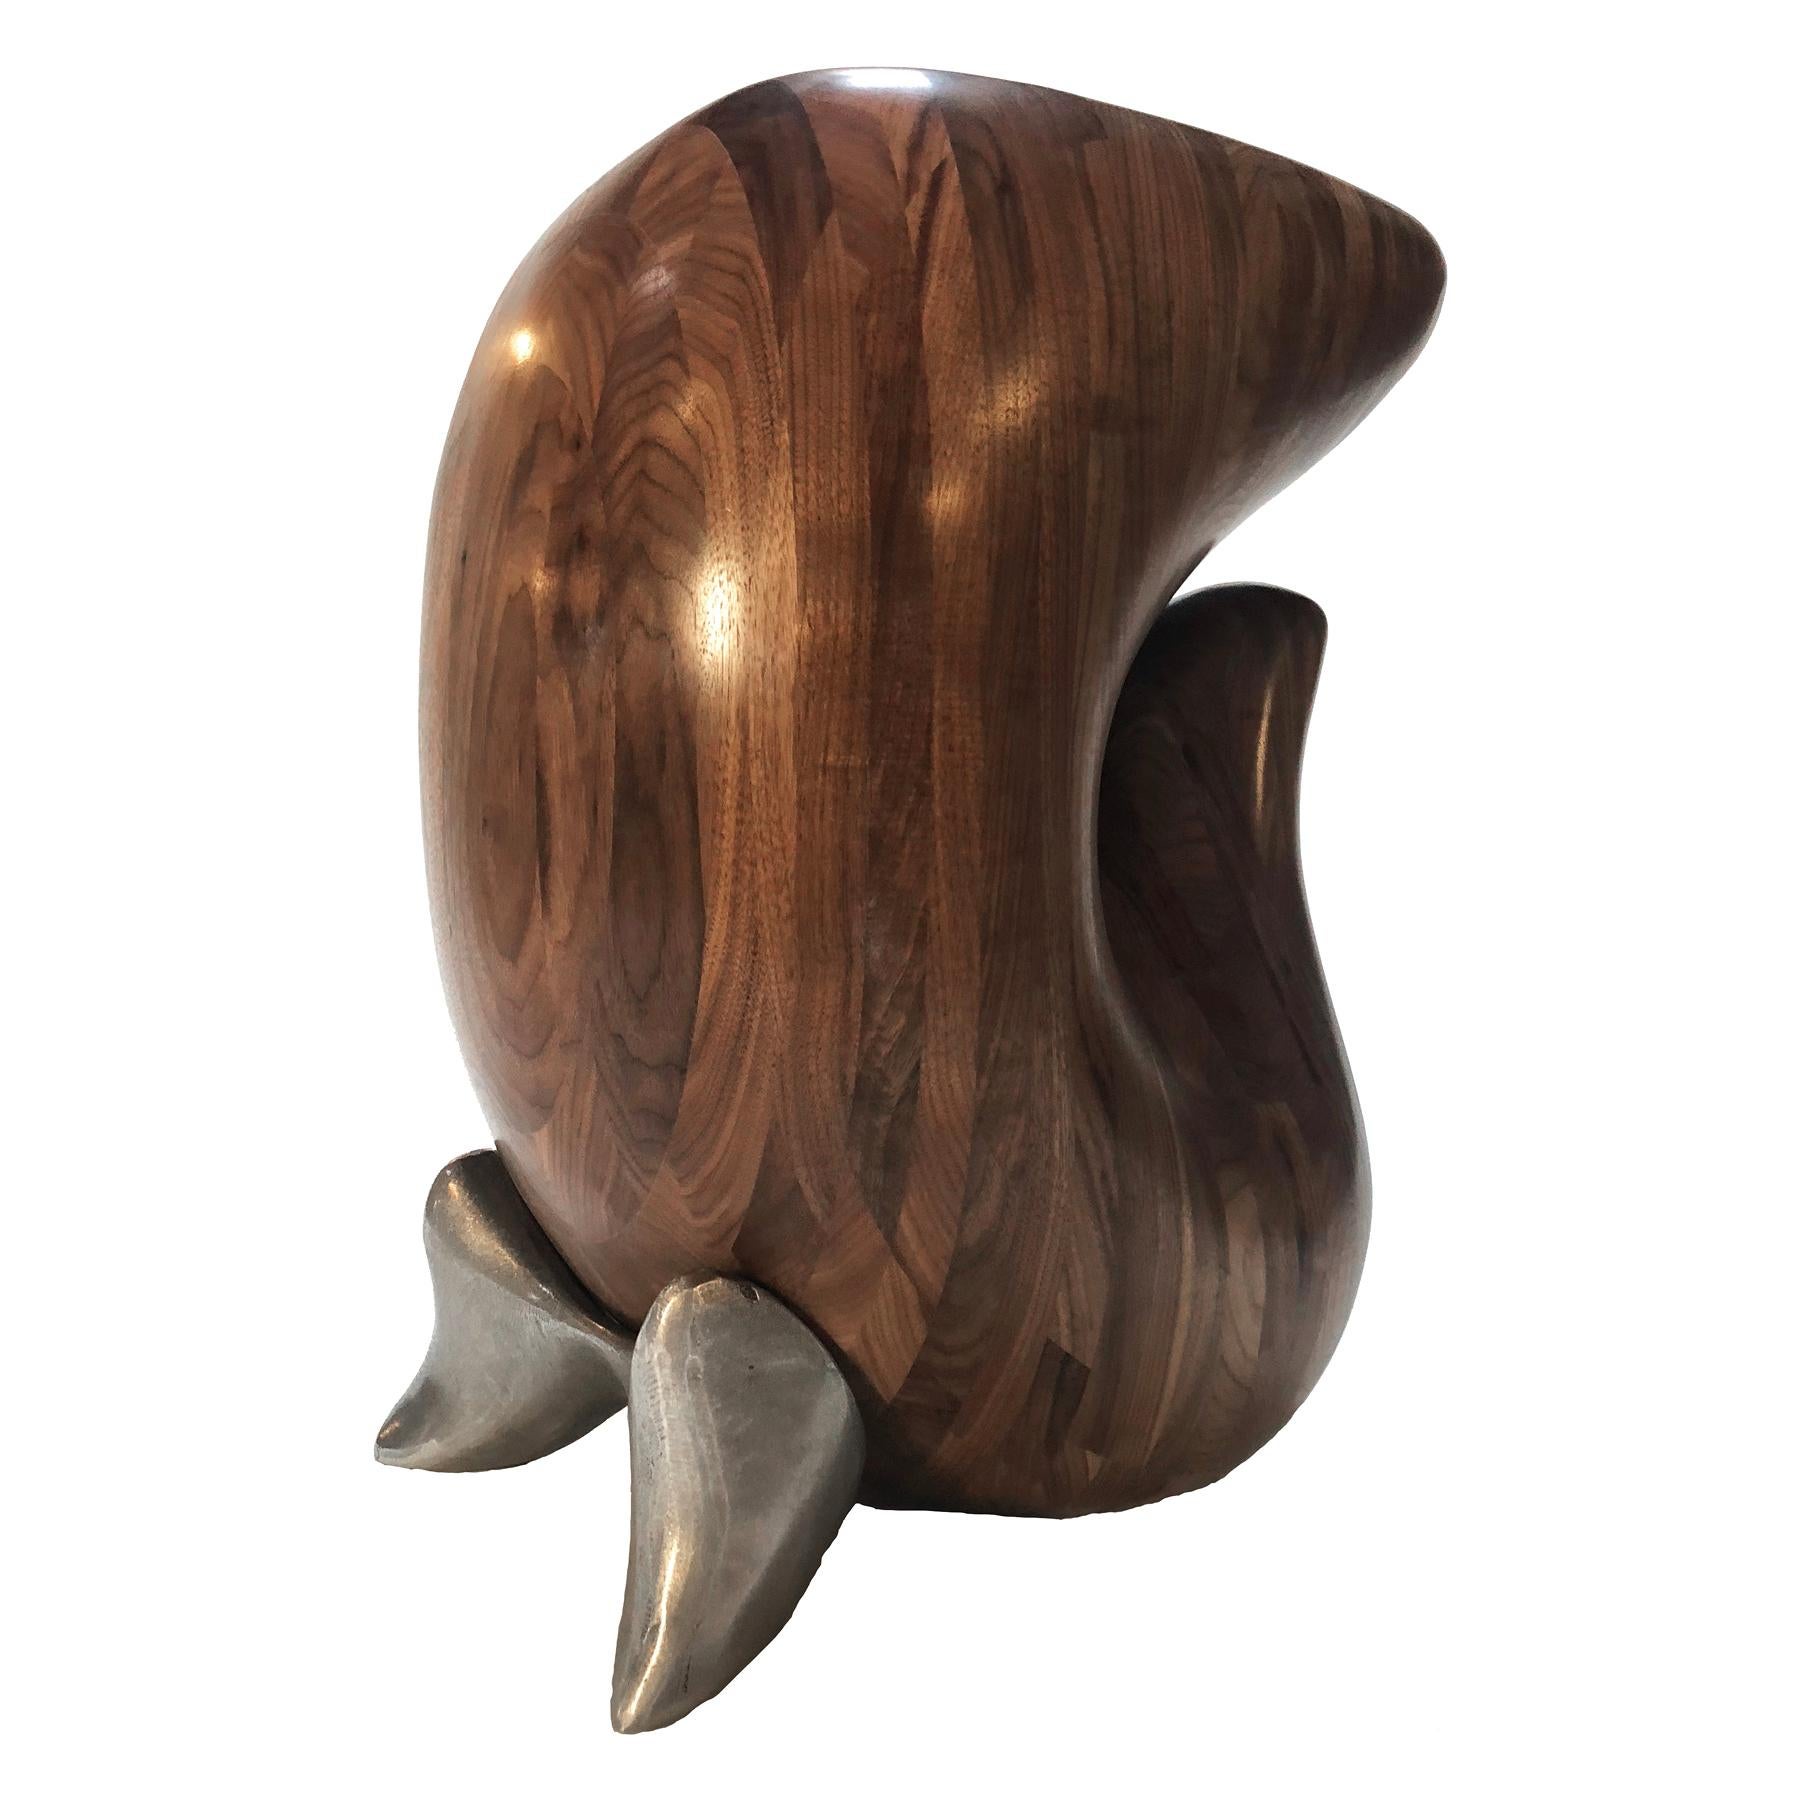 Carved Black Walnut And Cast Aluminum Elephant Seal Side Table, Jordan Mozer, USA, 2018 For Sale